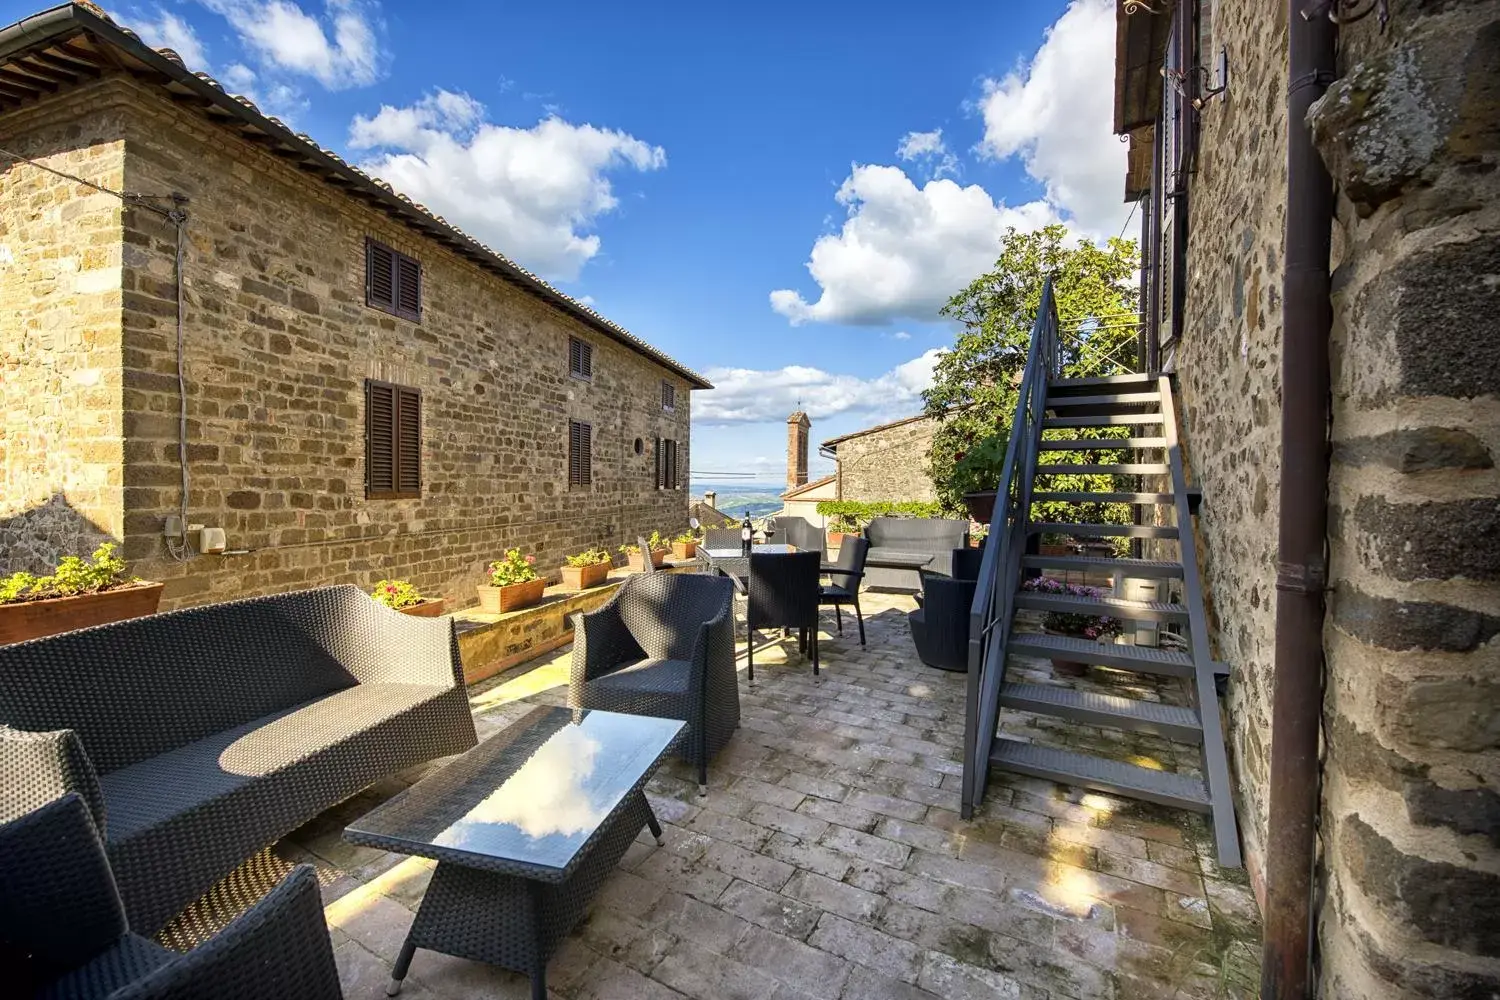 Balcony/Terrace, Restaurant/Places to Eat in Drogheria e Locanda Franci